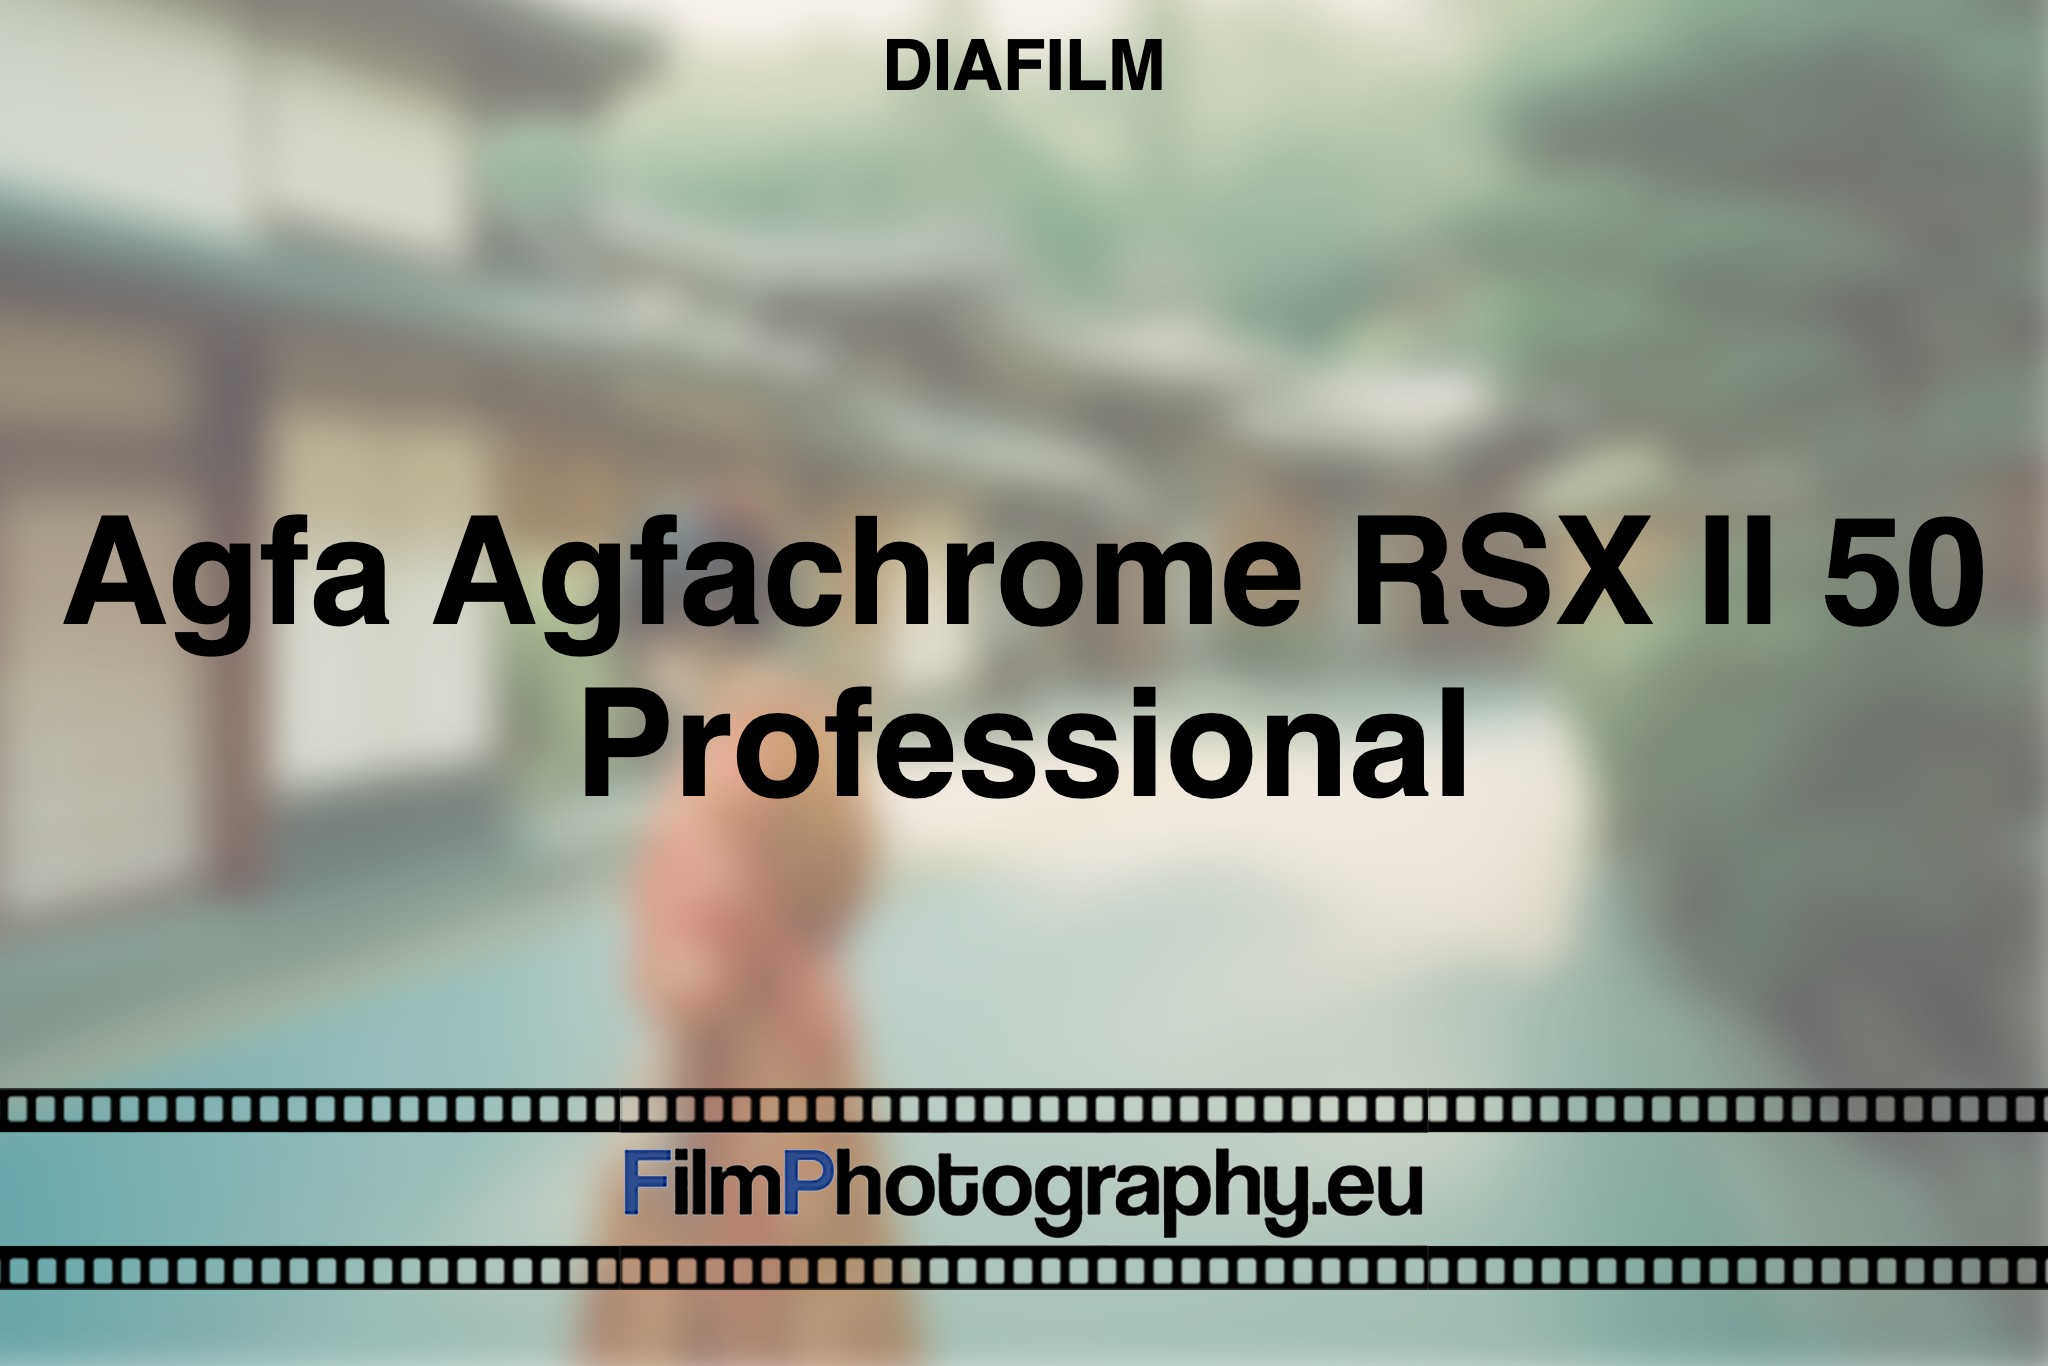 agfa-agfachrome-rsx-ii-50-professional-diafilm-bnv